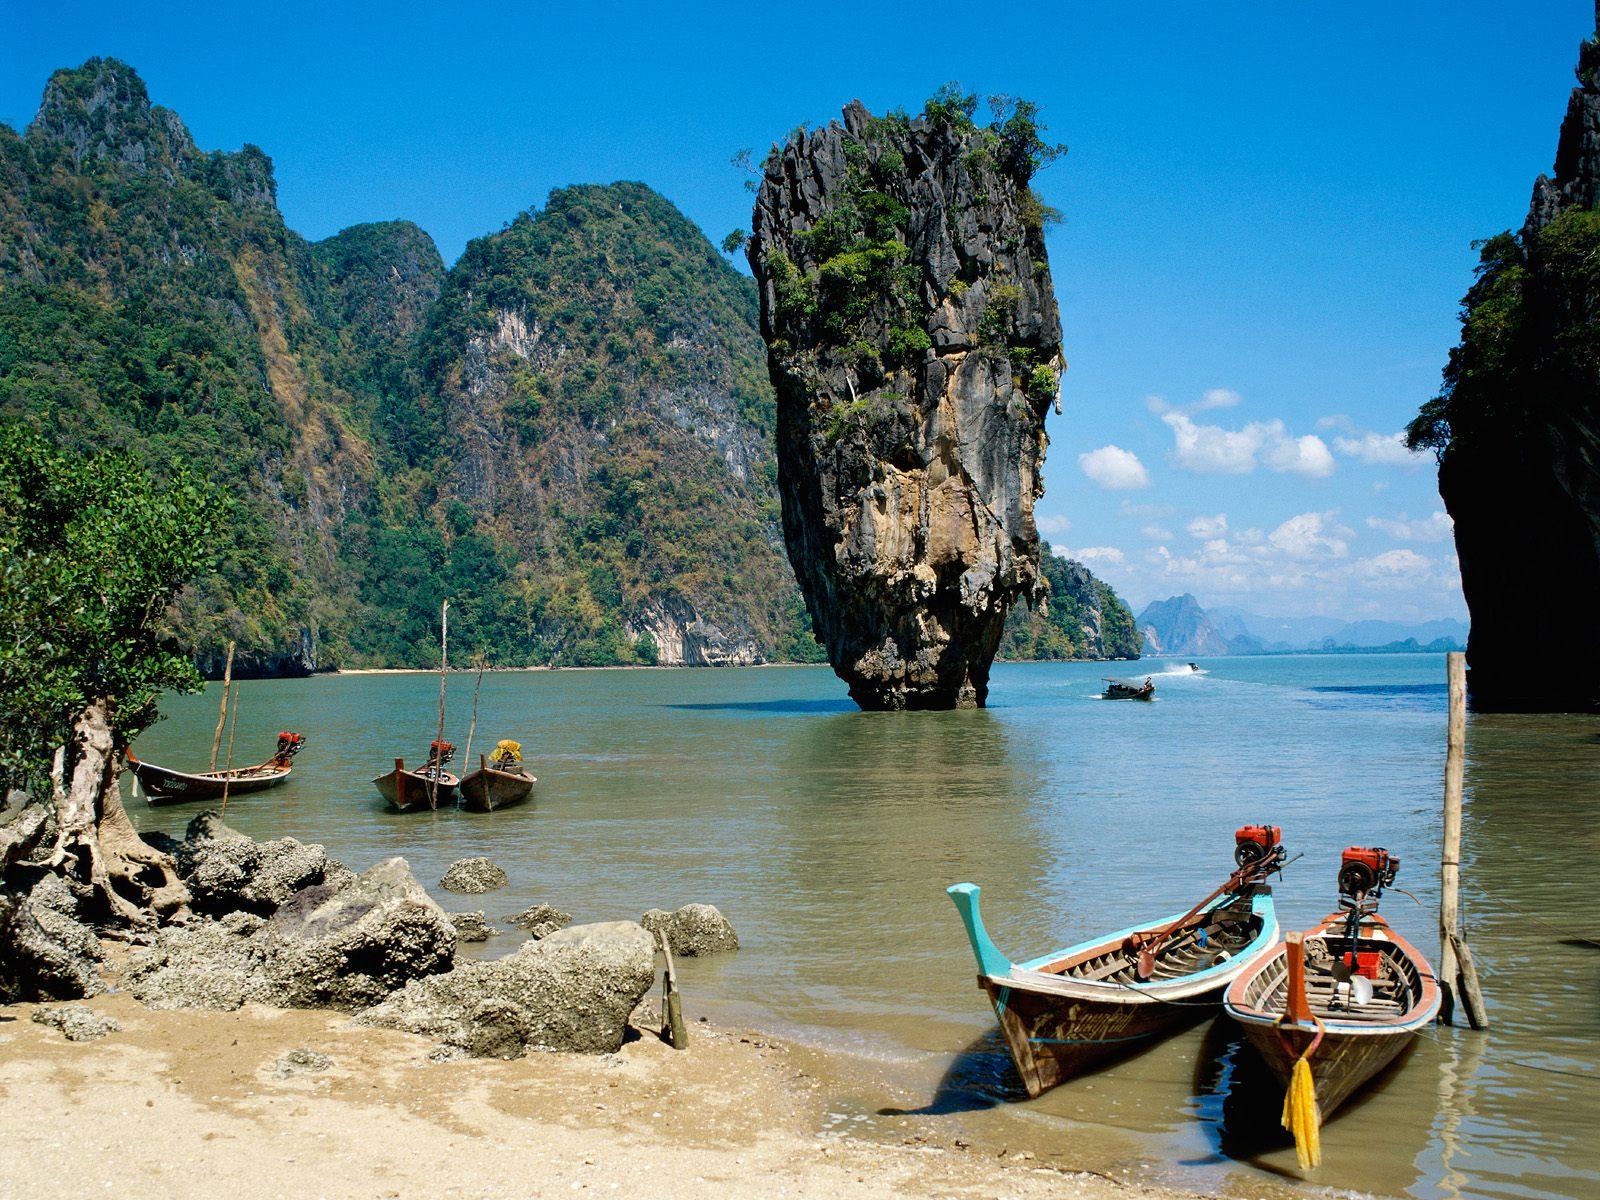 Thailand Travel Images  Free Download on Freepik